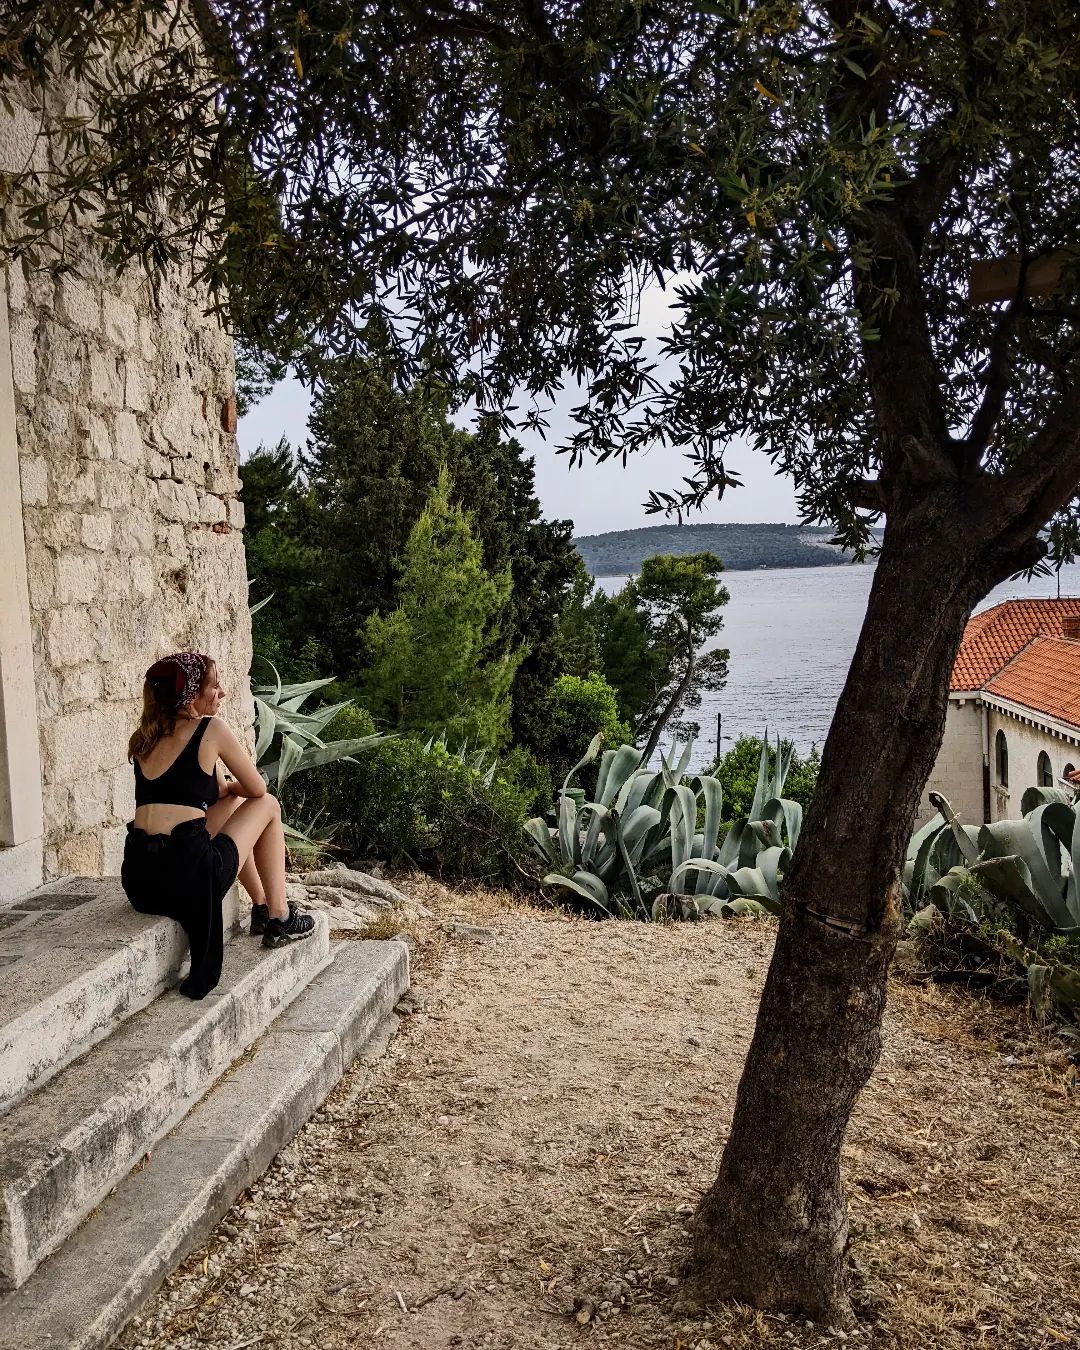 Marjan Forest Park - 10 Best Tourist Attractions in Split